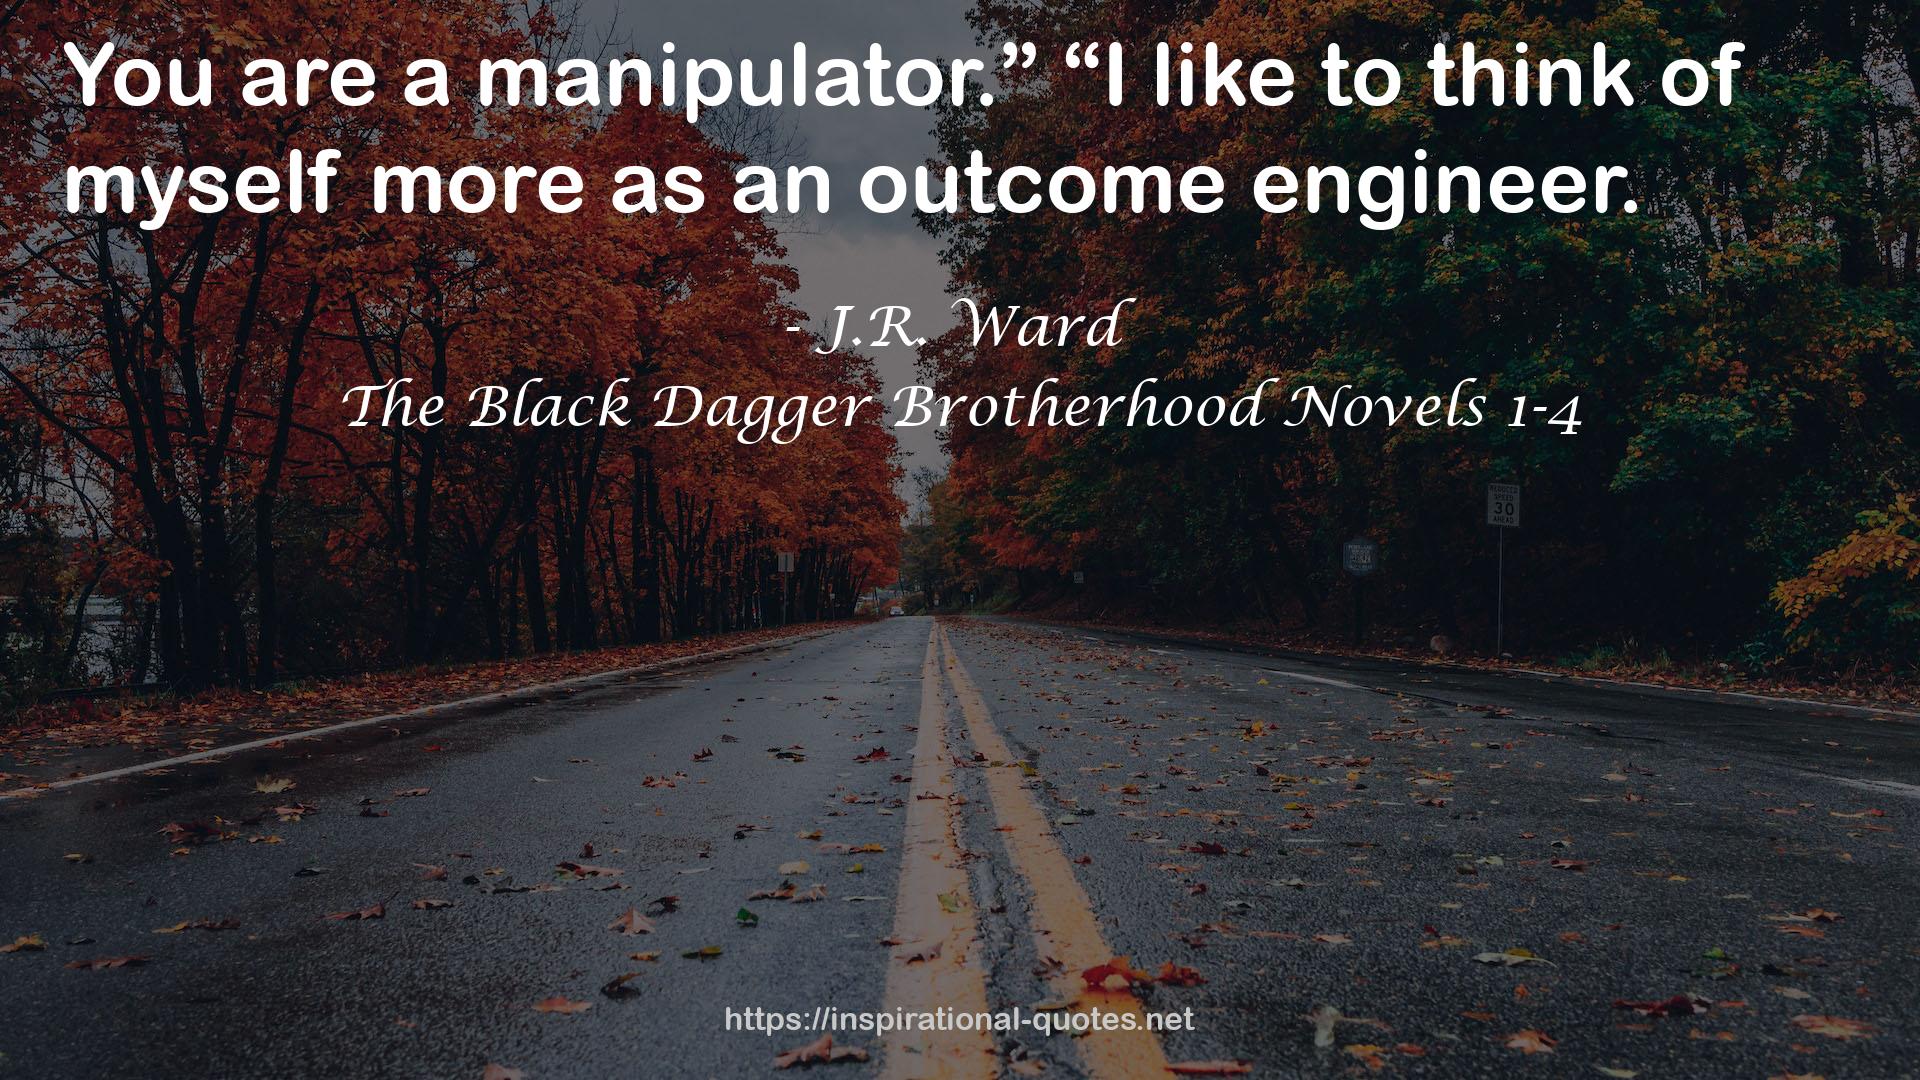 The Black Dagger Brotherhood Novels 1-4 QUOTES